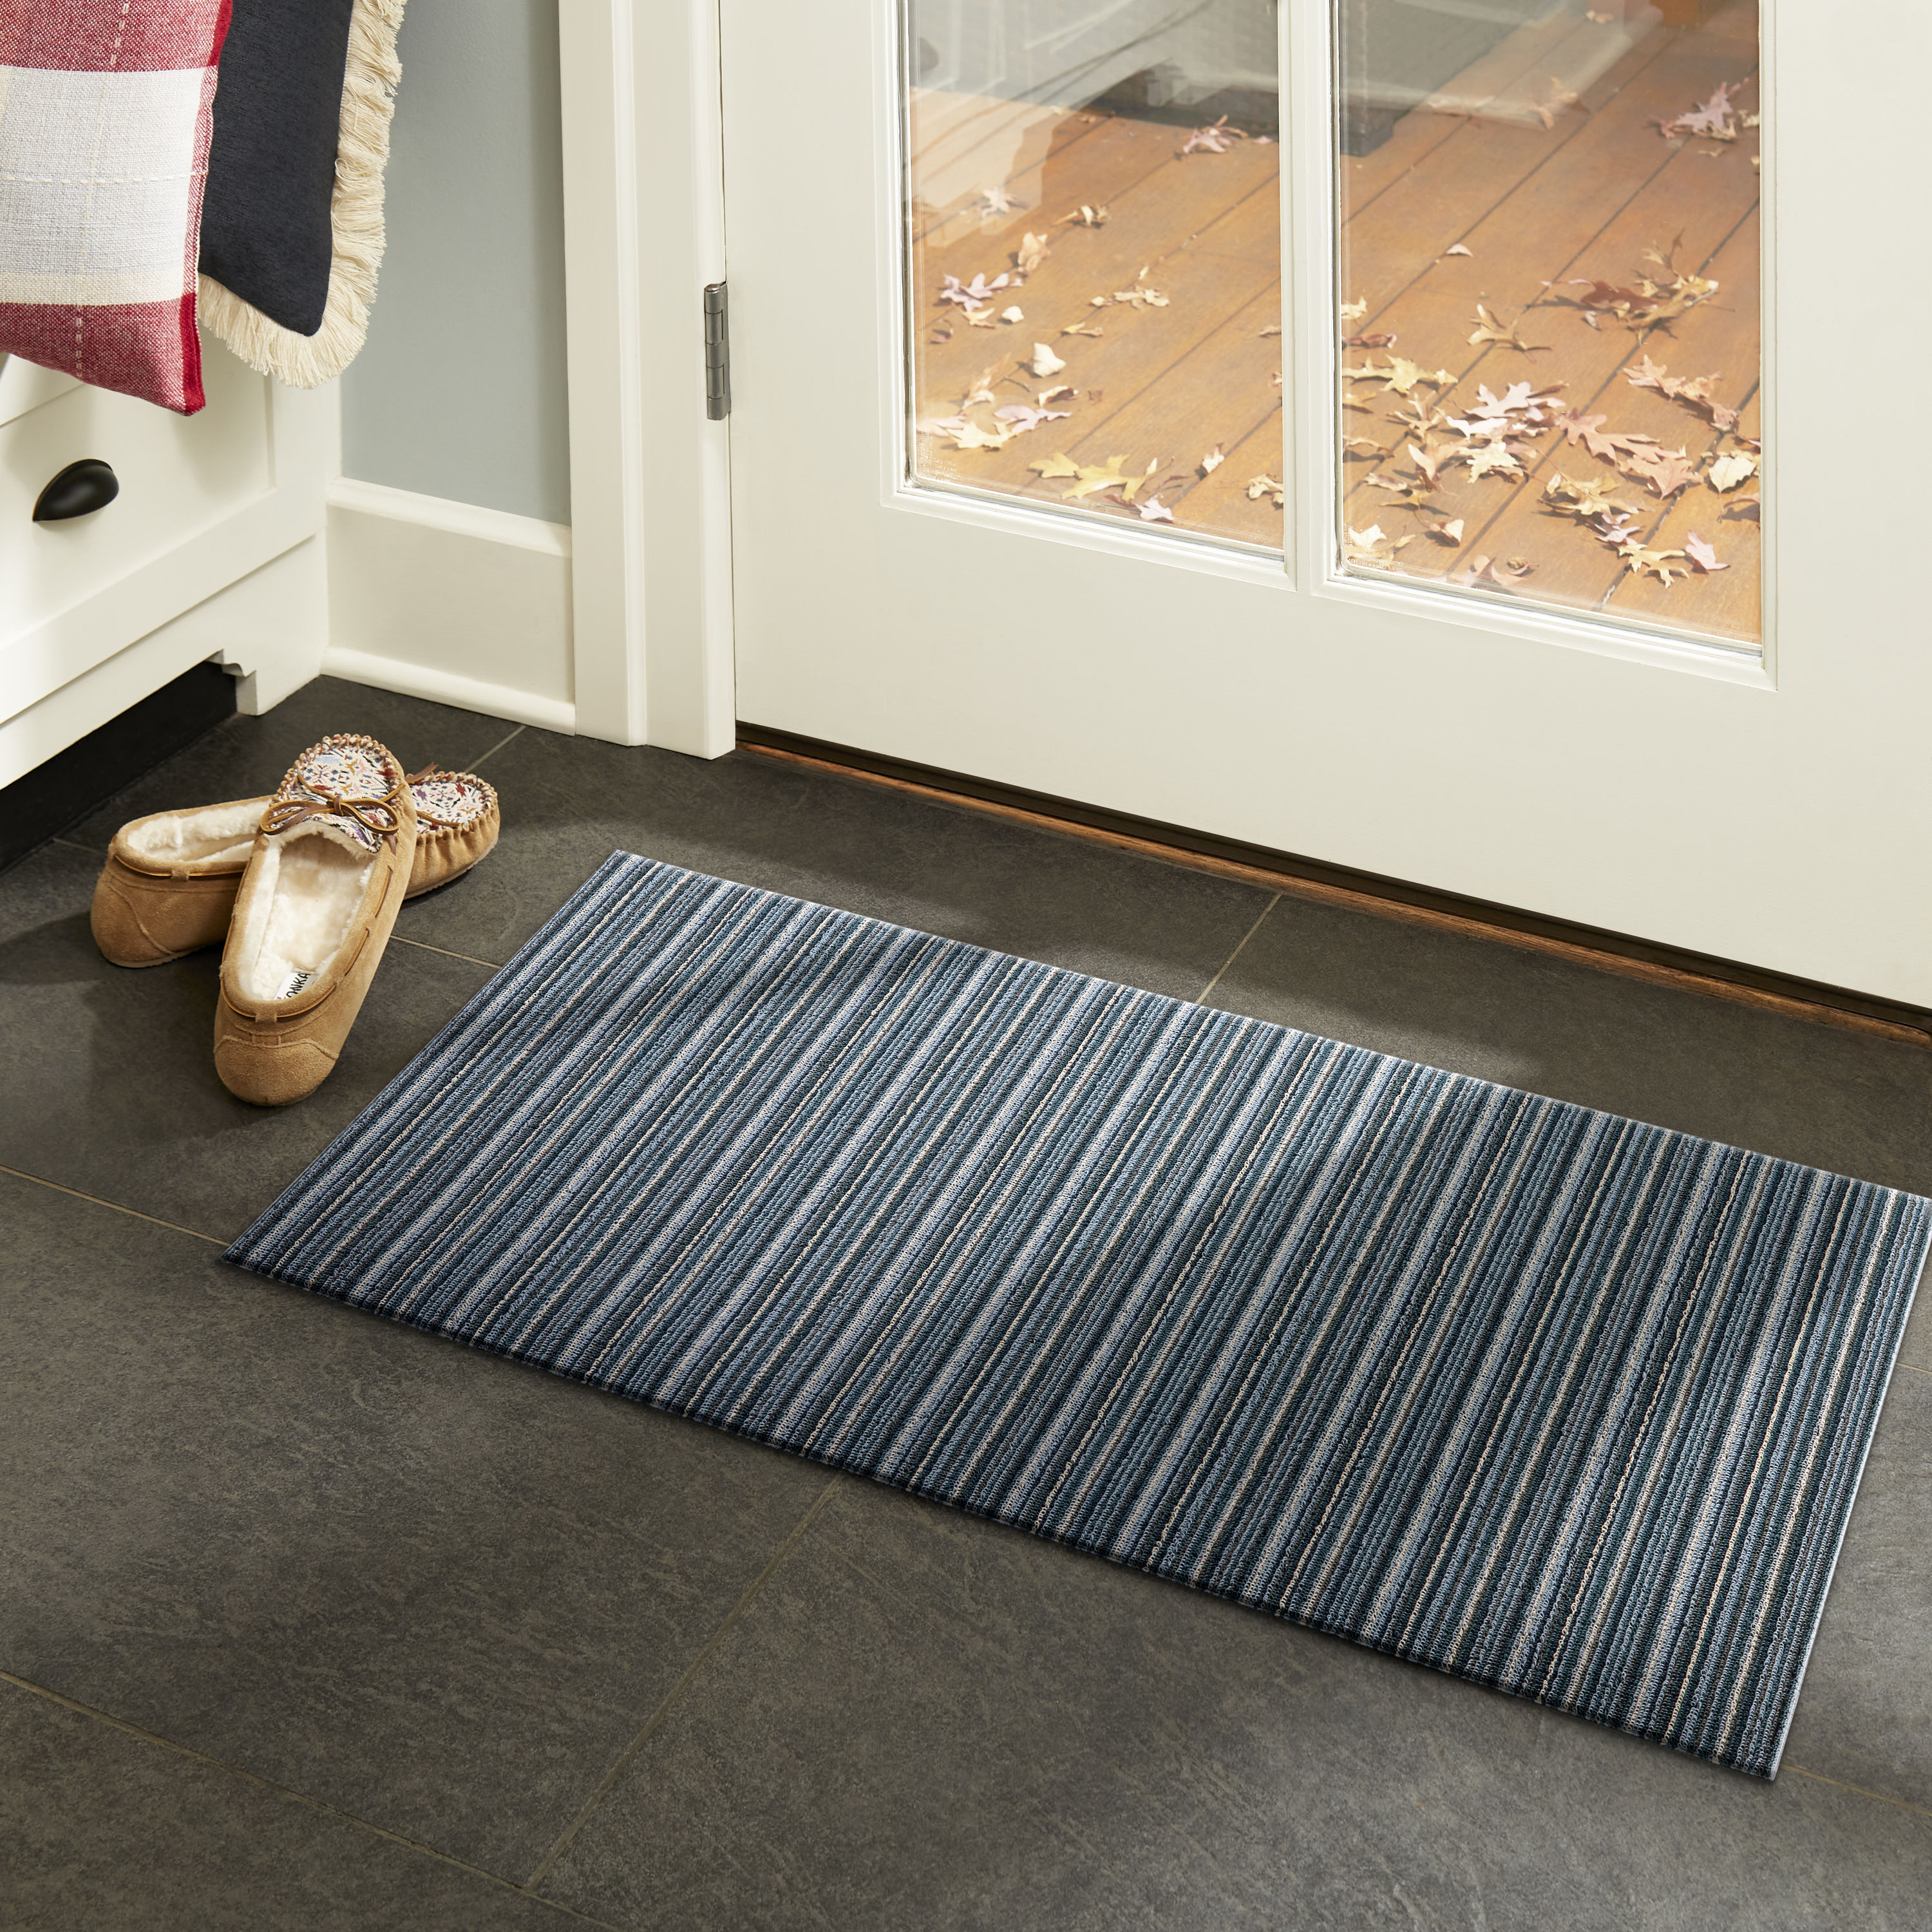 PVC Anti-Slip Mat Floor Mat Carpet Home Office Indoor And Outdoor Essential New 